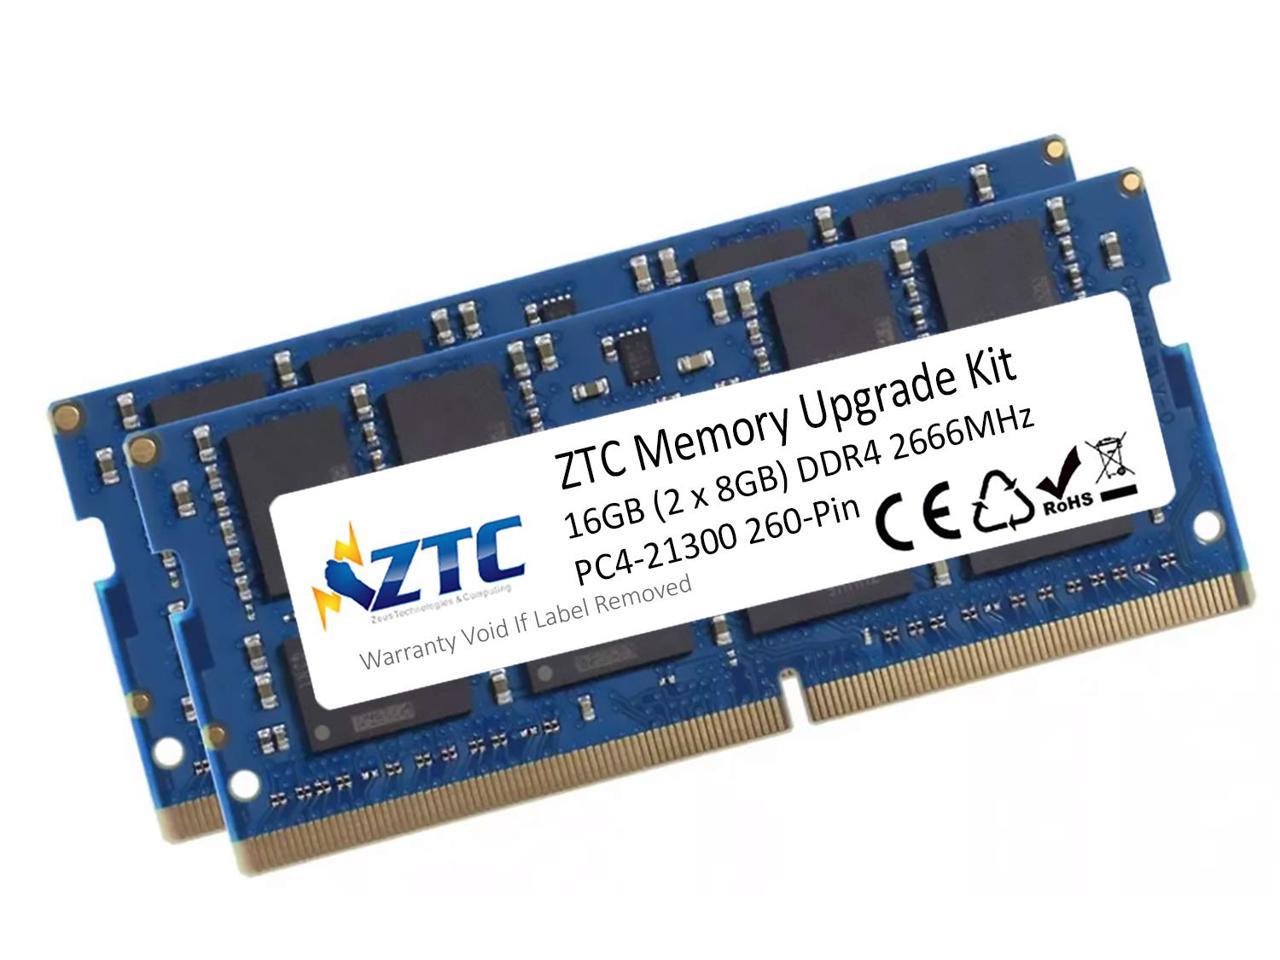 ZTC 16GB (2 x 8GB) 2666MHz DDR4 PC4-21300 SO-DIMM 260 Pin Memory Upgrade, for 2018 Mac Mini (macmini18,1), 2019 27 inch iMac (iMac19,1) and PC laptops